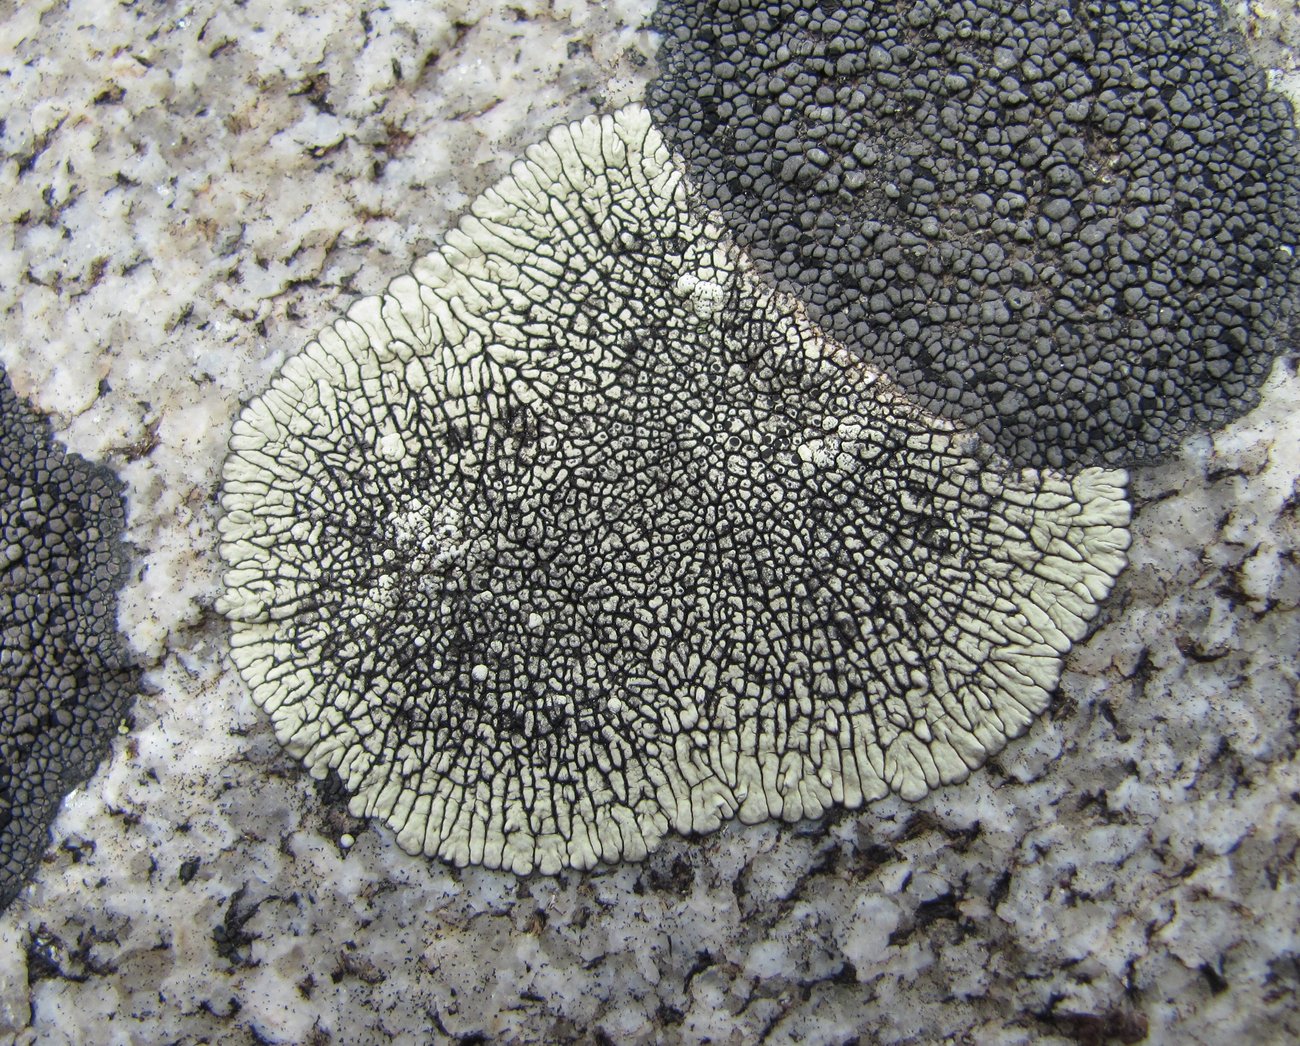 Image of Dimelaena oreina specimen.